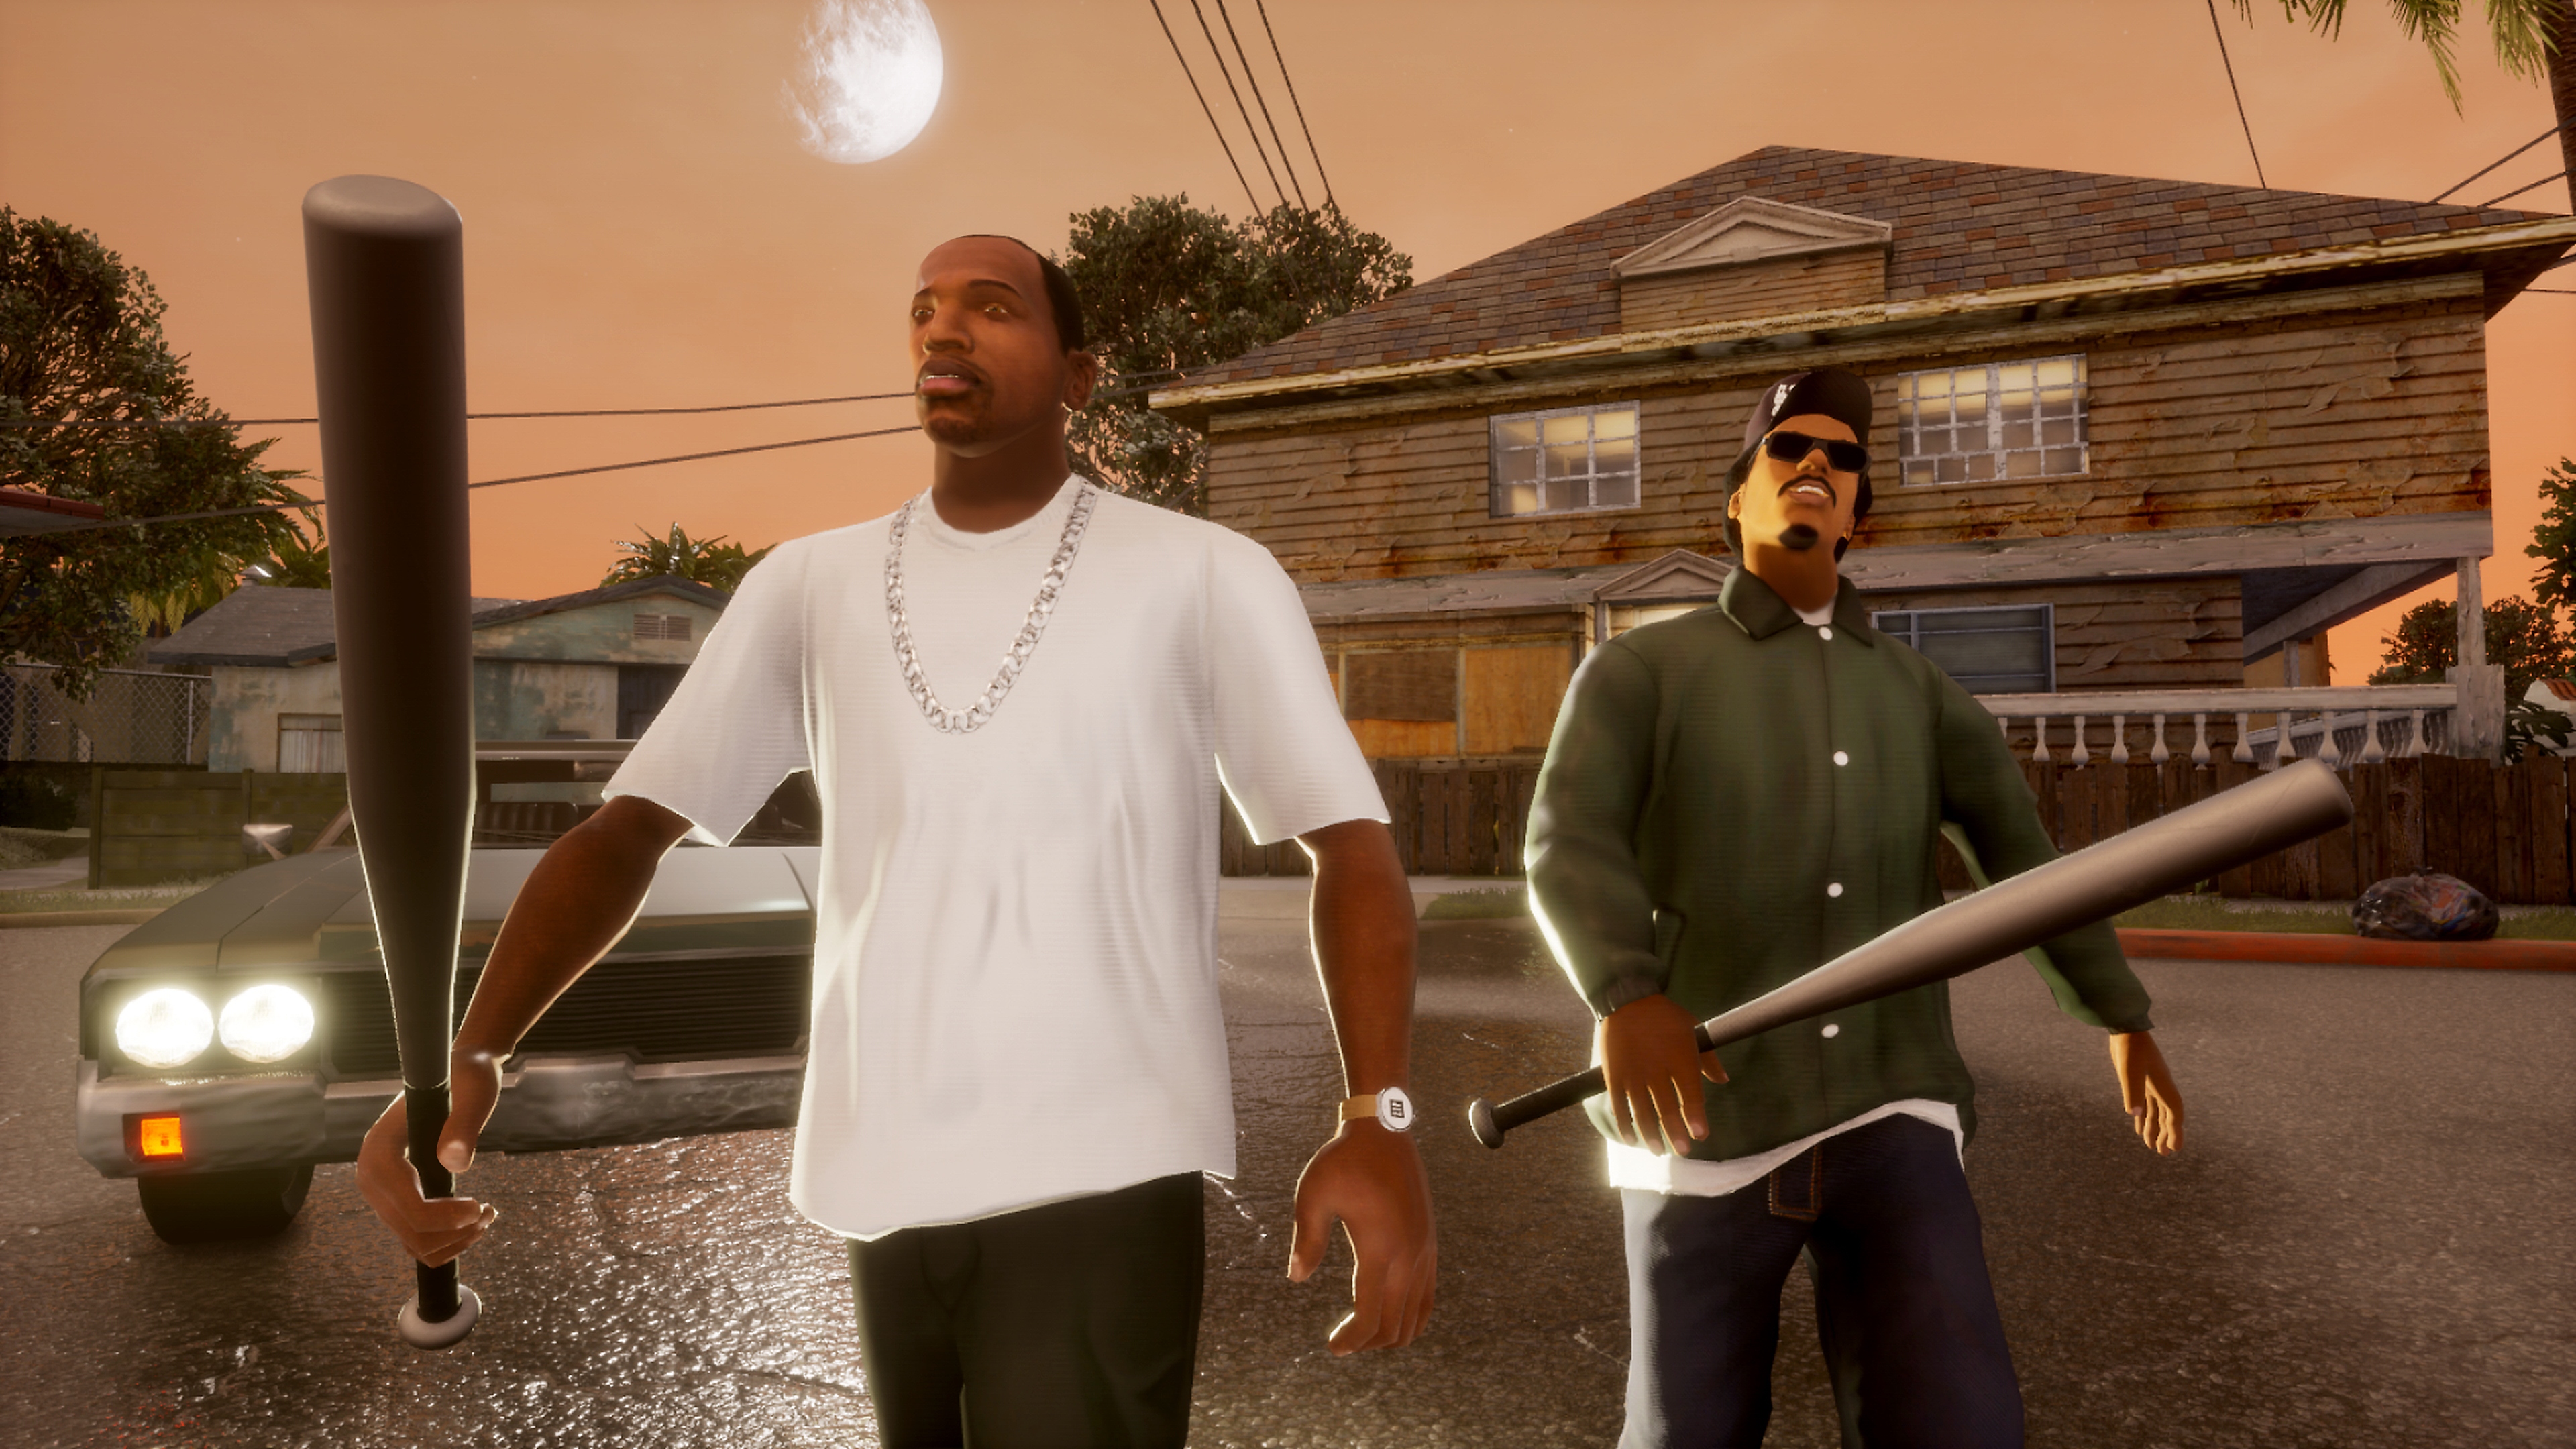  Grand Theft Auto: San Andreas – снимок экрана 1 из галереи